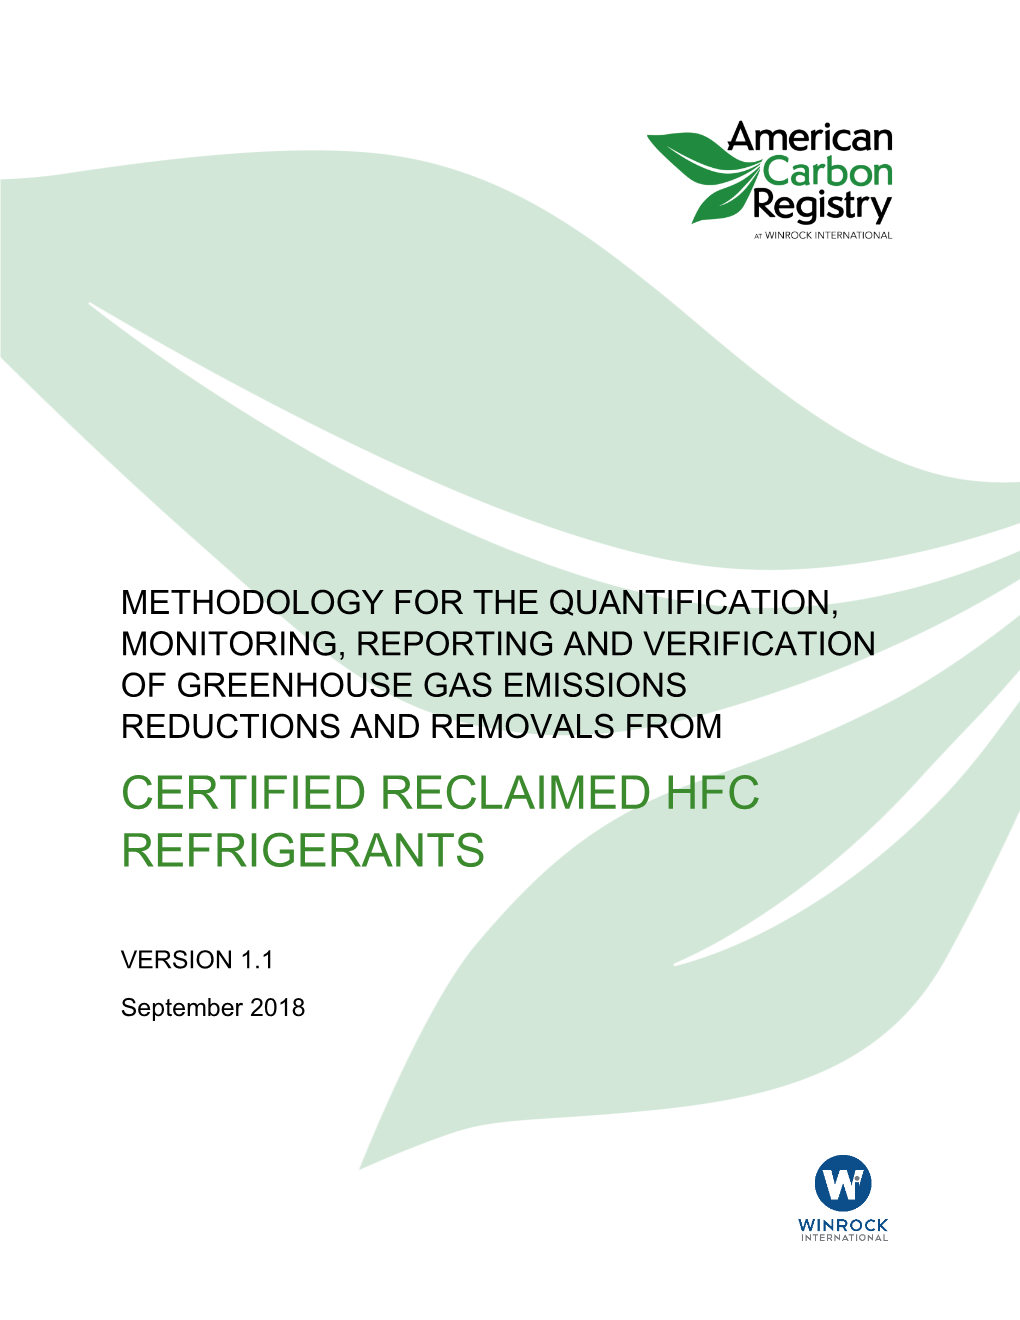 Certified Reclaimed HFC Refrigerants V1.1